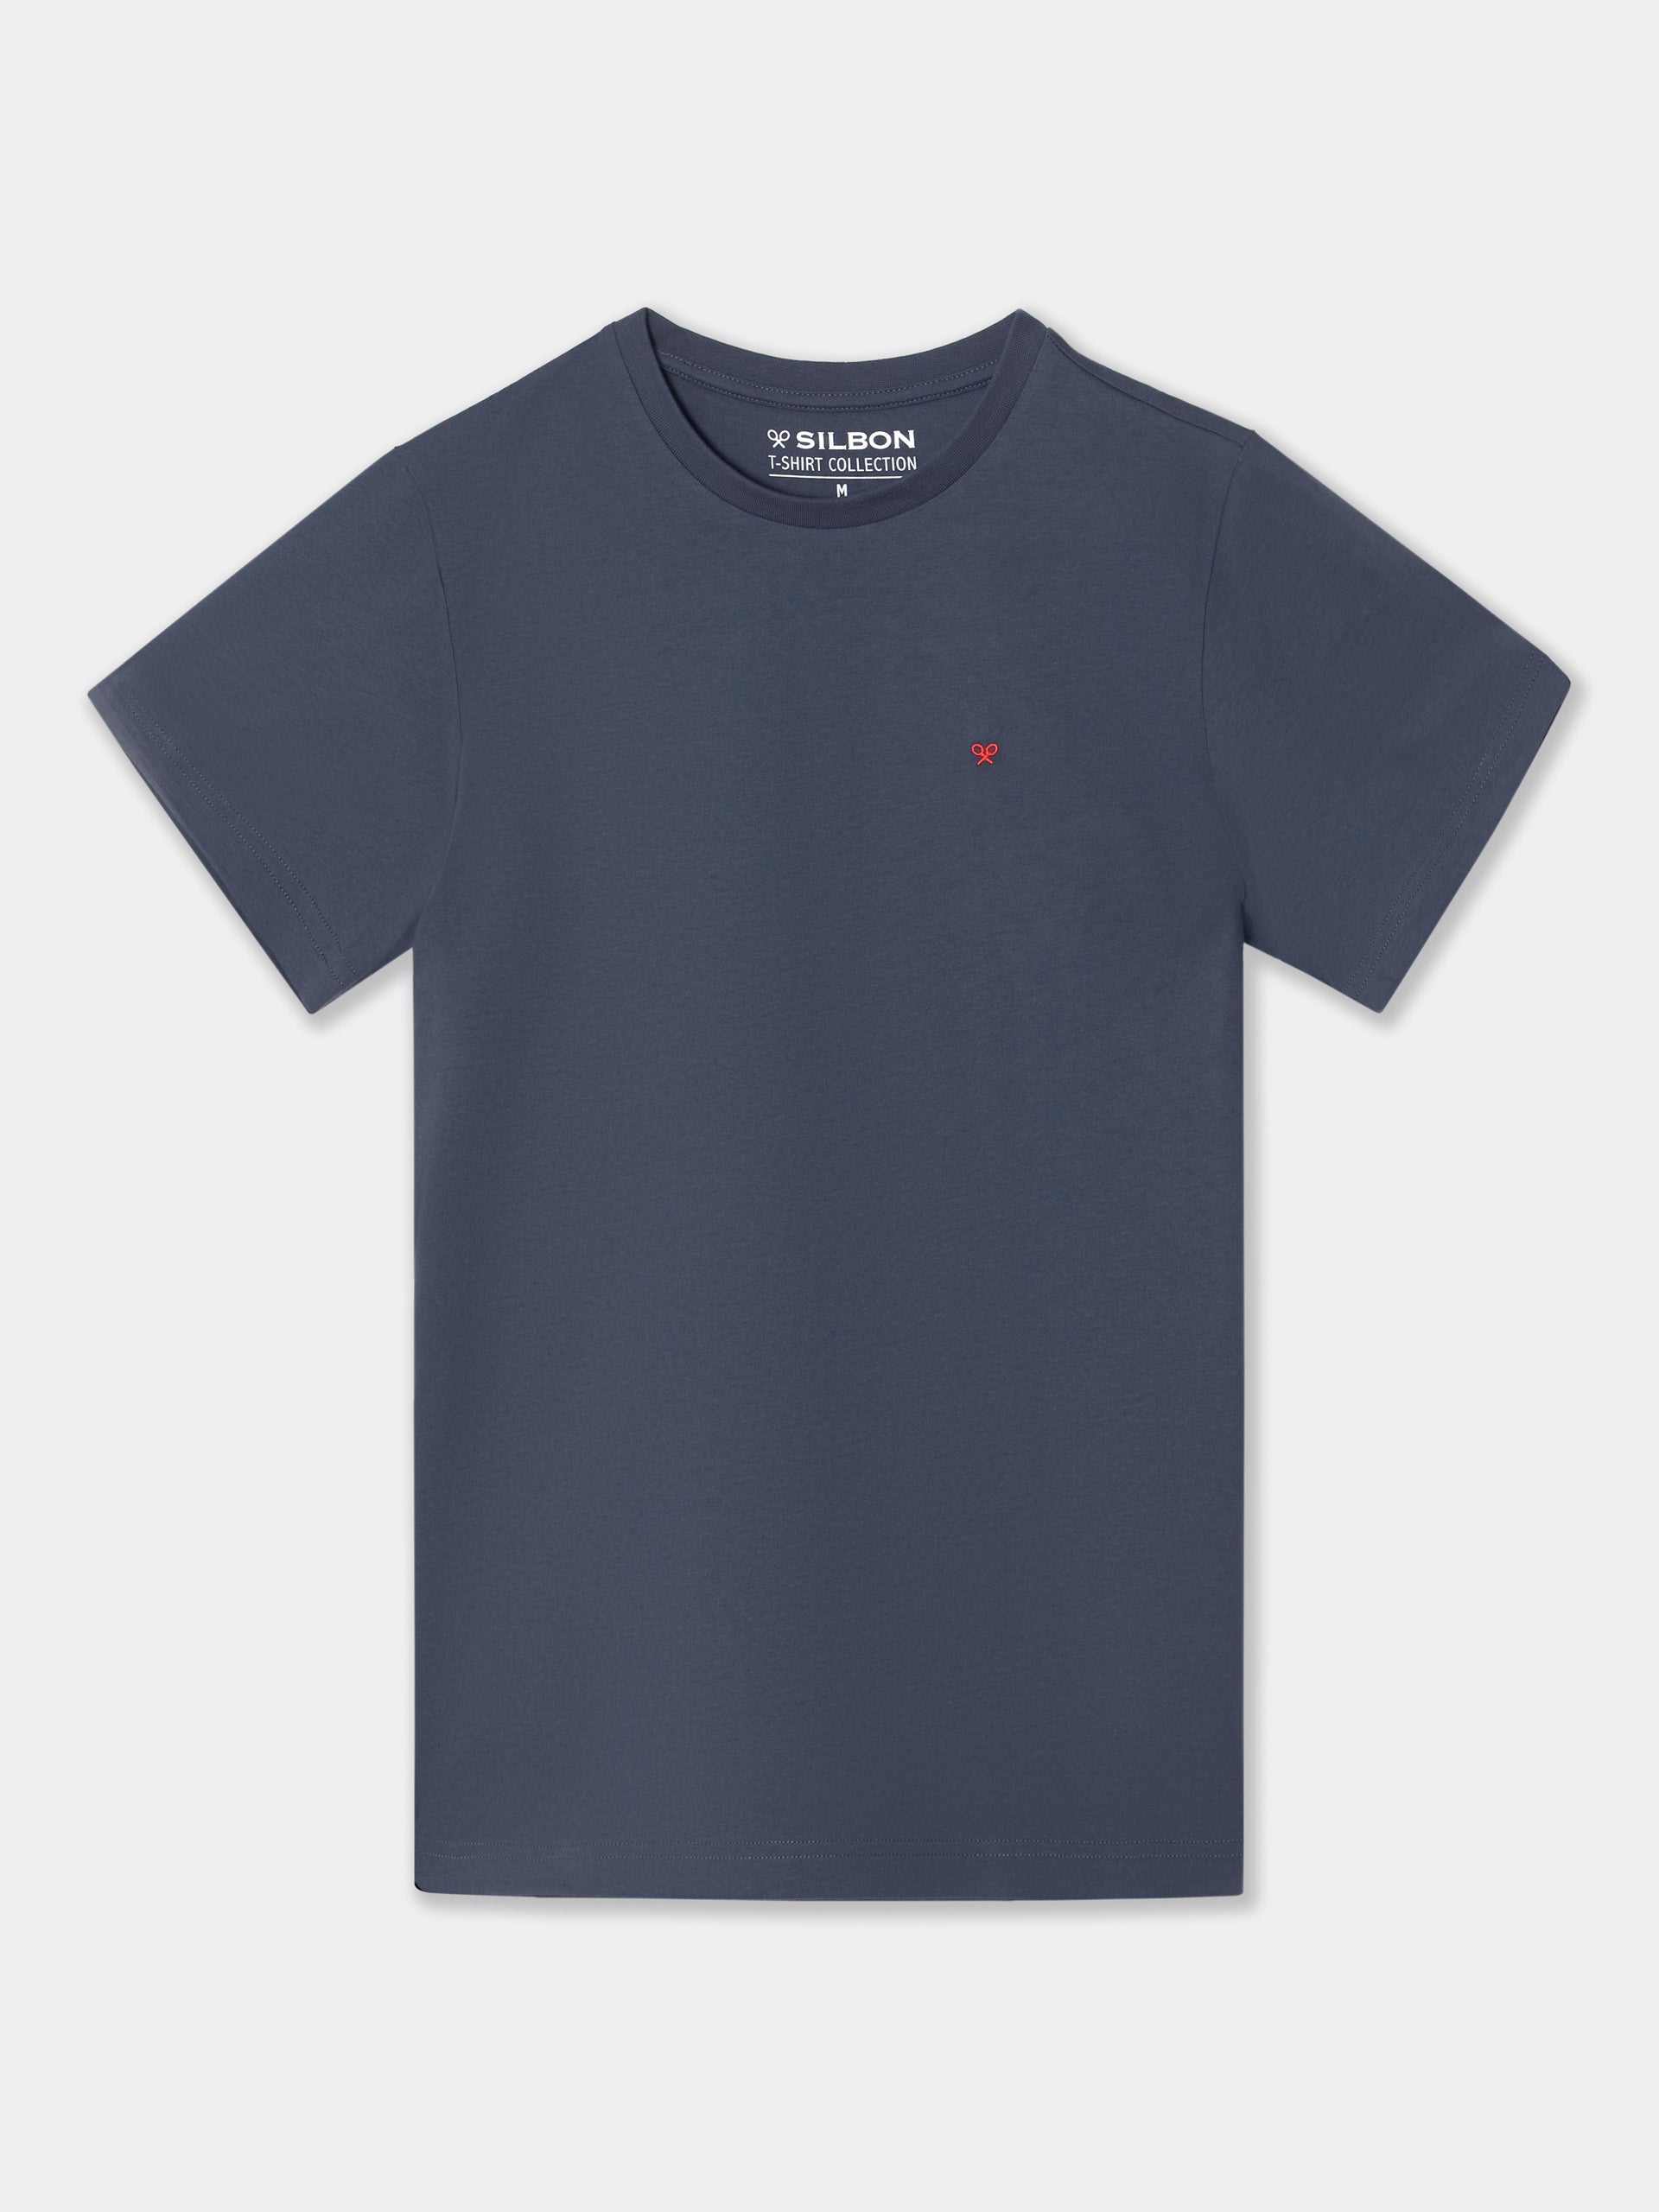 T-shirt bleu marine mini logo Silbon